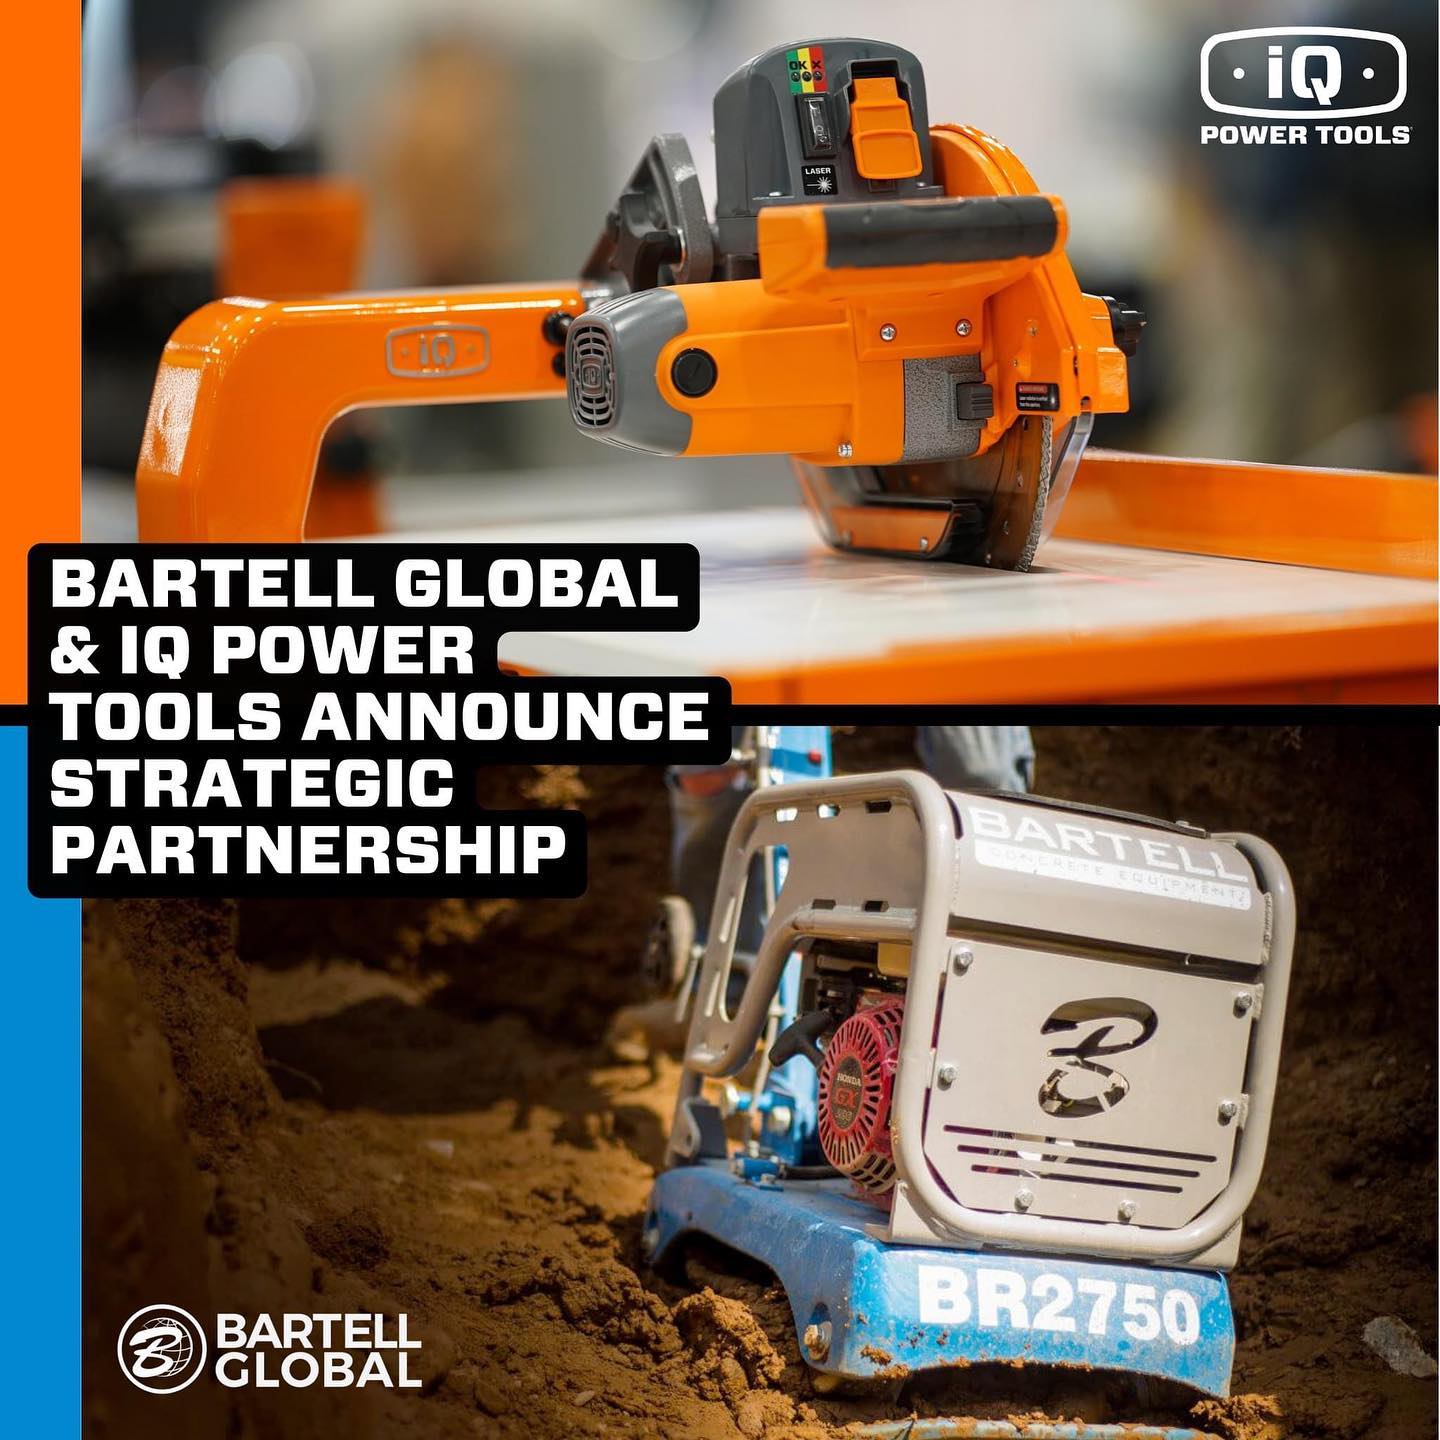 Bartell Global & iQ Power Tools Announce Strategic Partnership